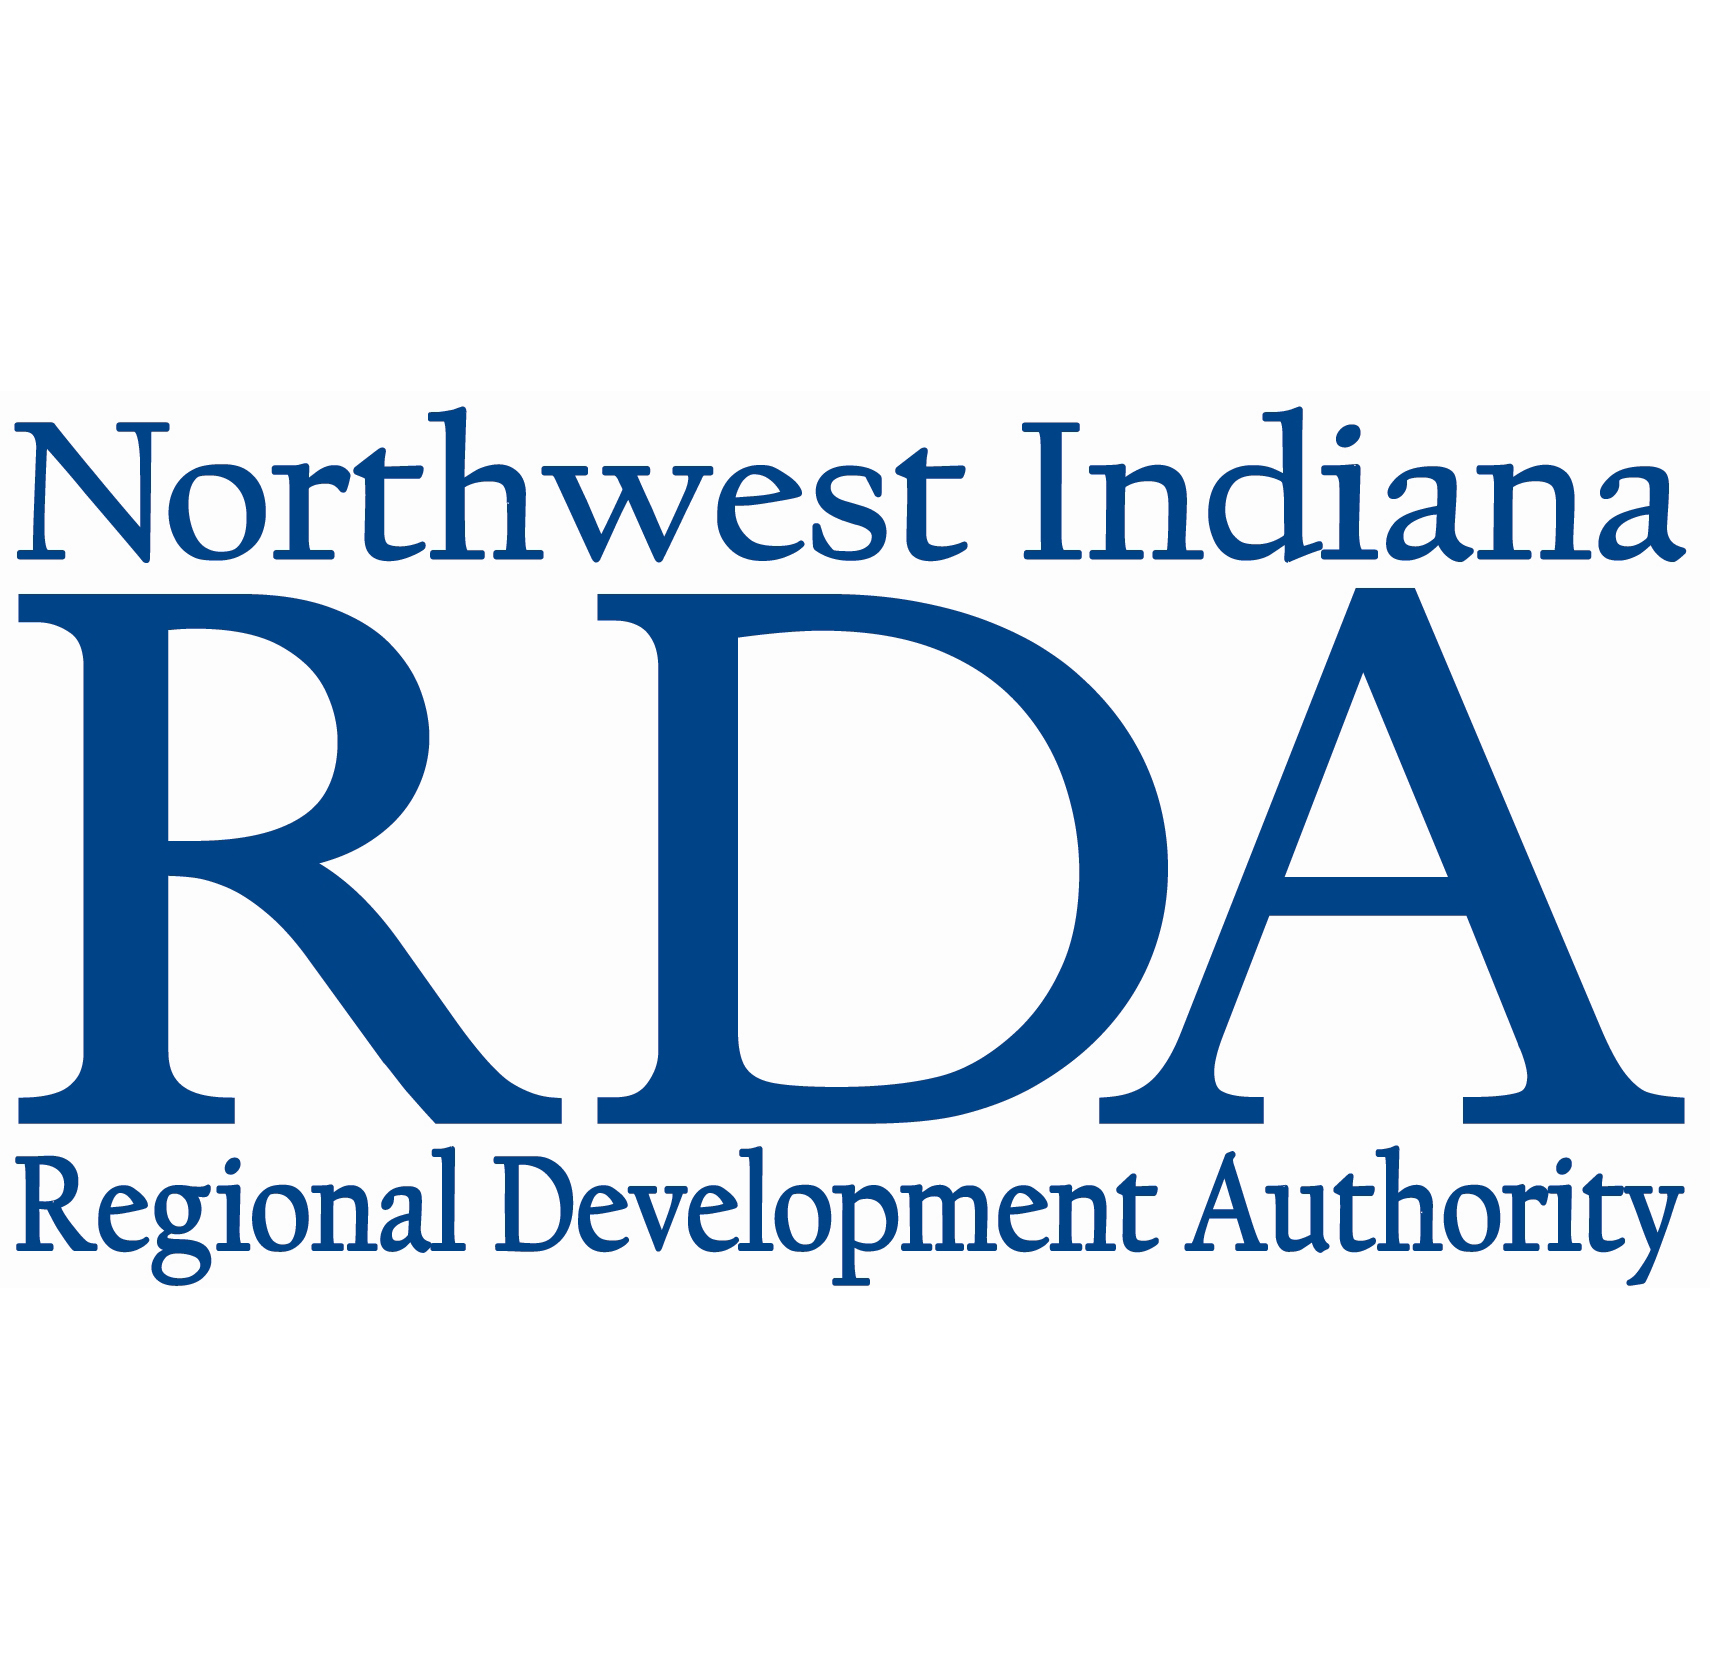 Northwest Indiana Regional Development Authority (RDA)